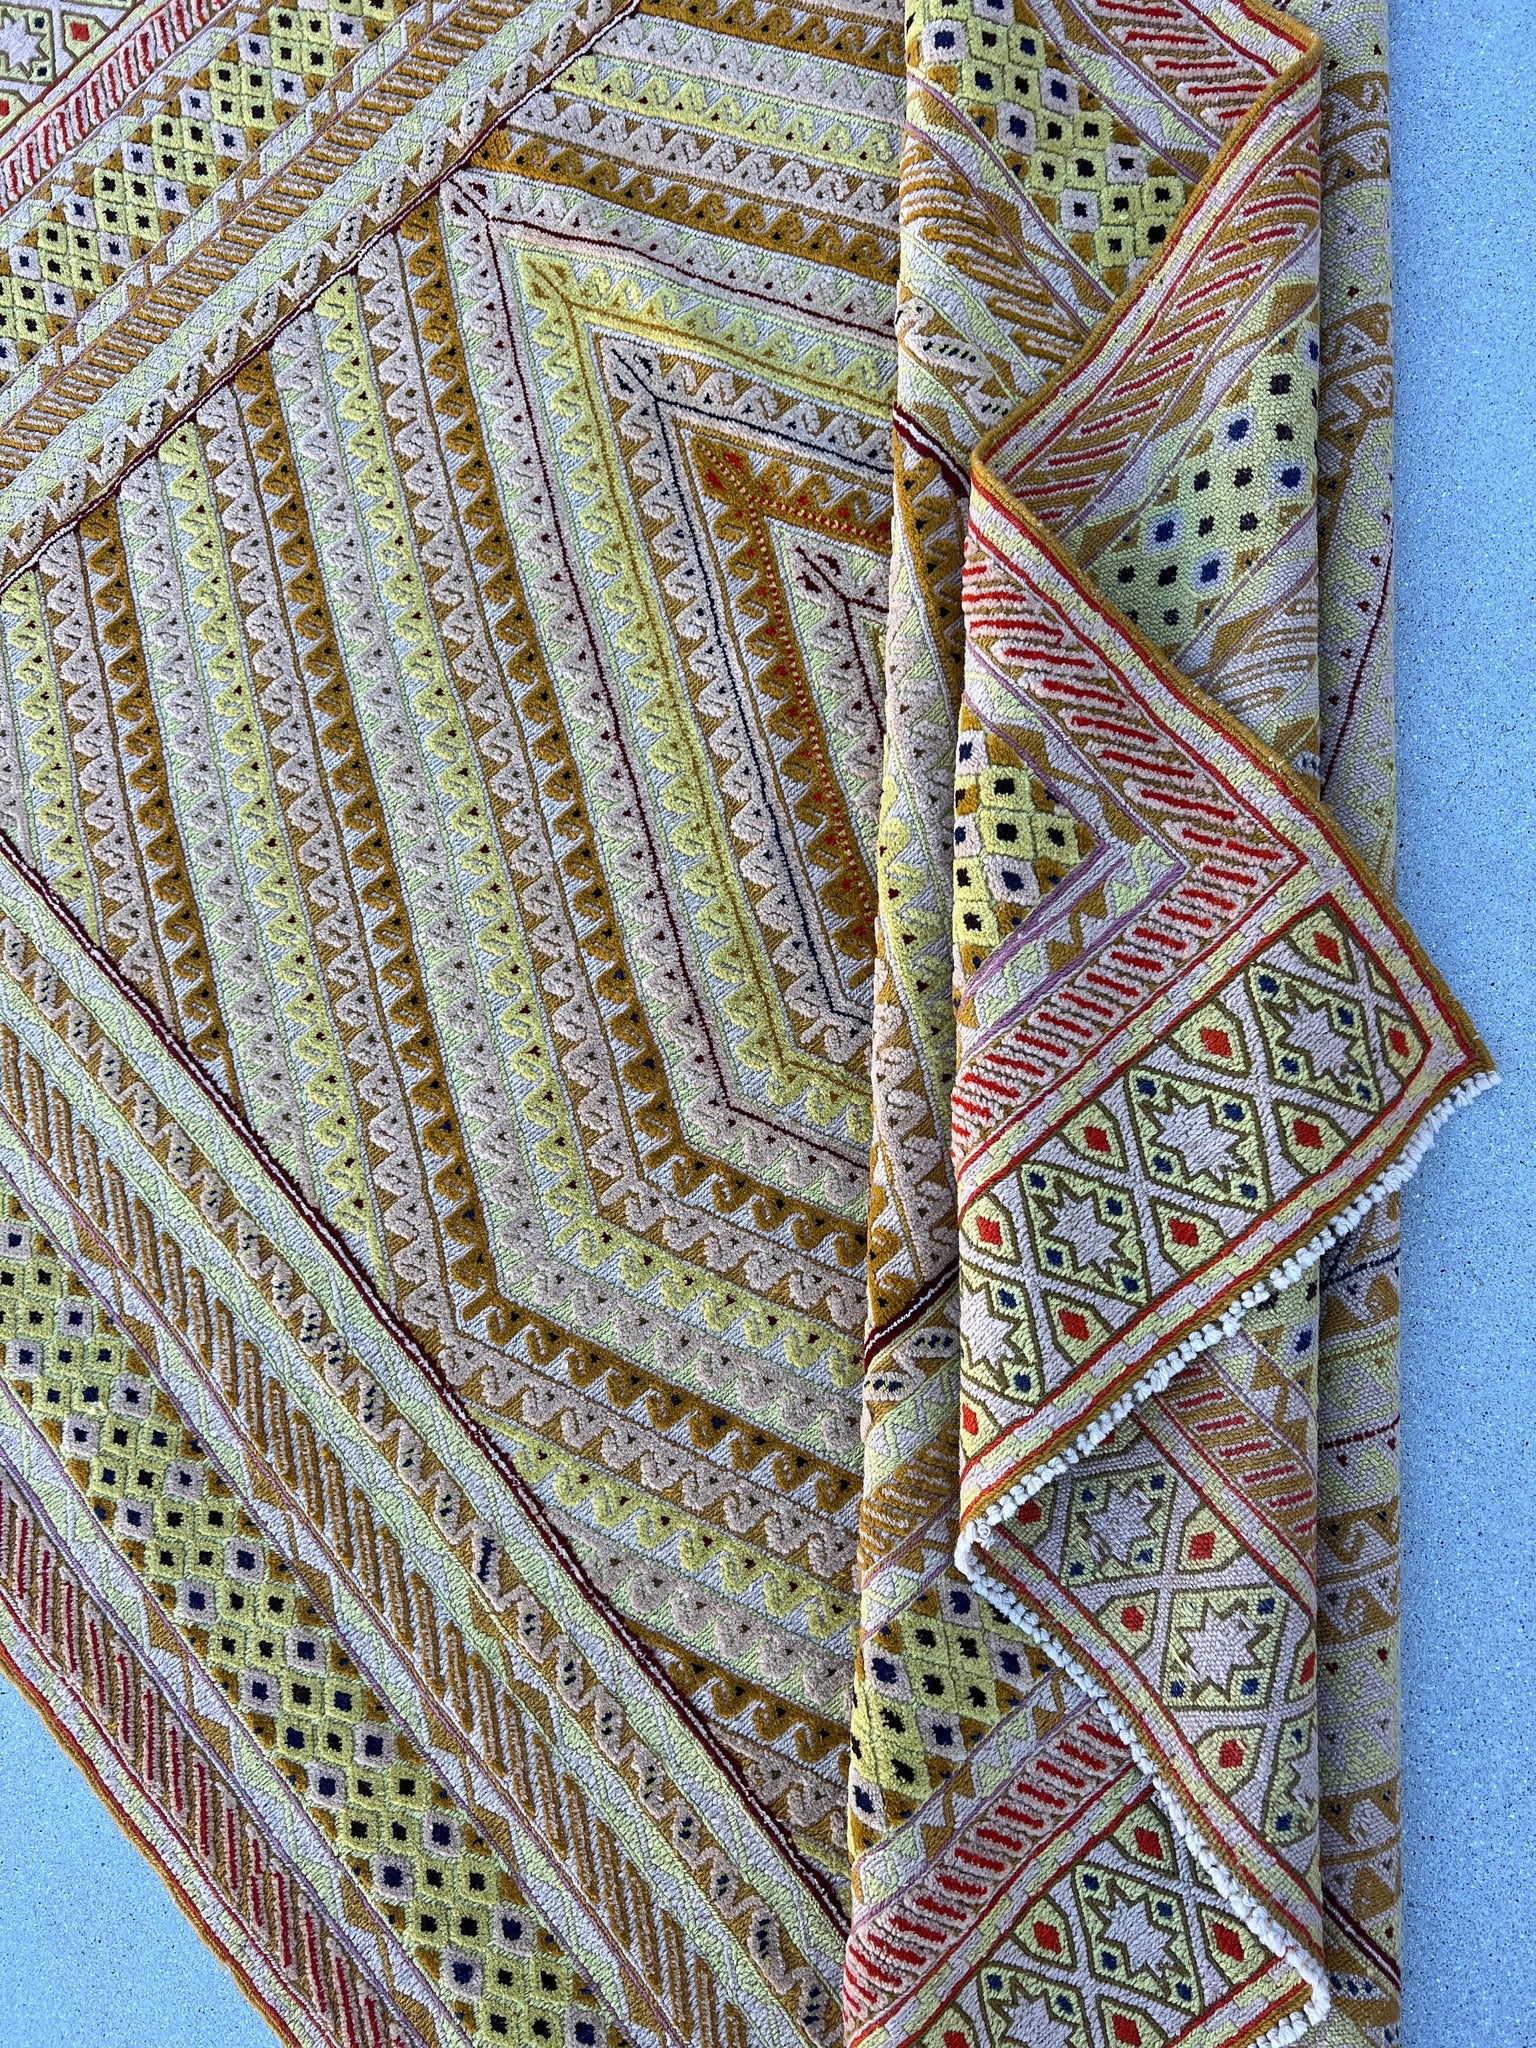 5x6 (150x180) Handmade Afghan Rug | Cornsilk Gold Moss Green Ivory Black Brick Red Tan | Geometric Hand Knotted Turkish Persian Wool